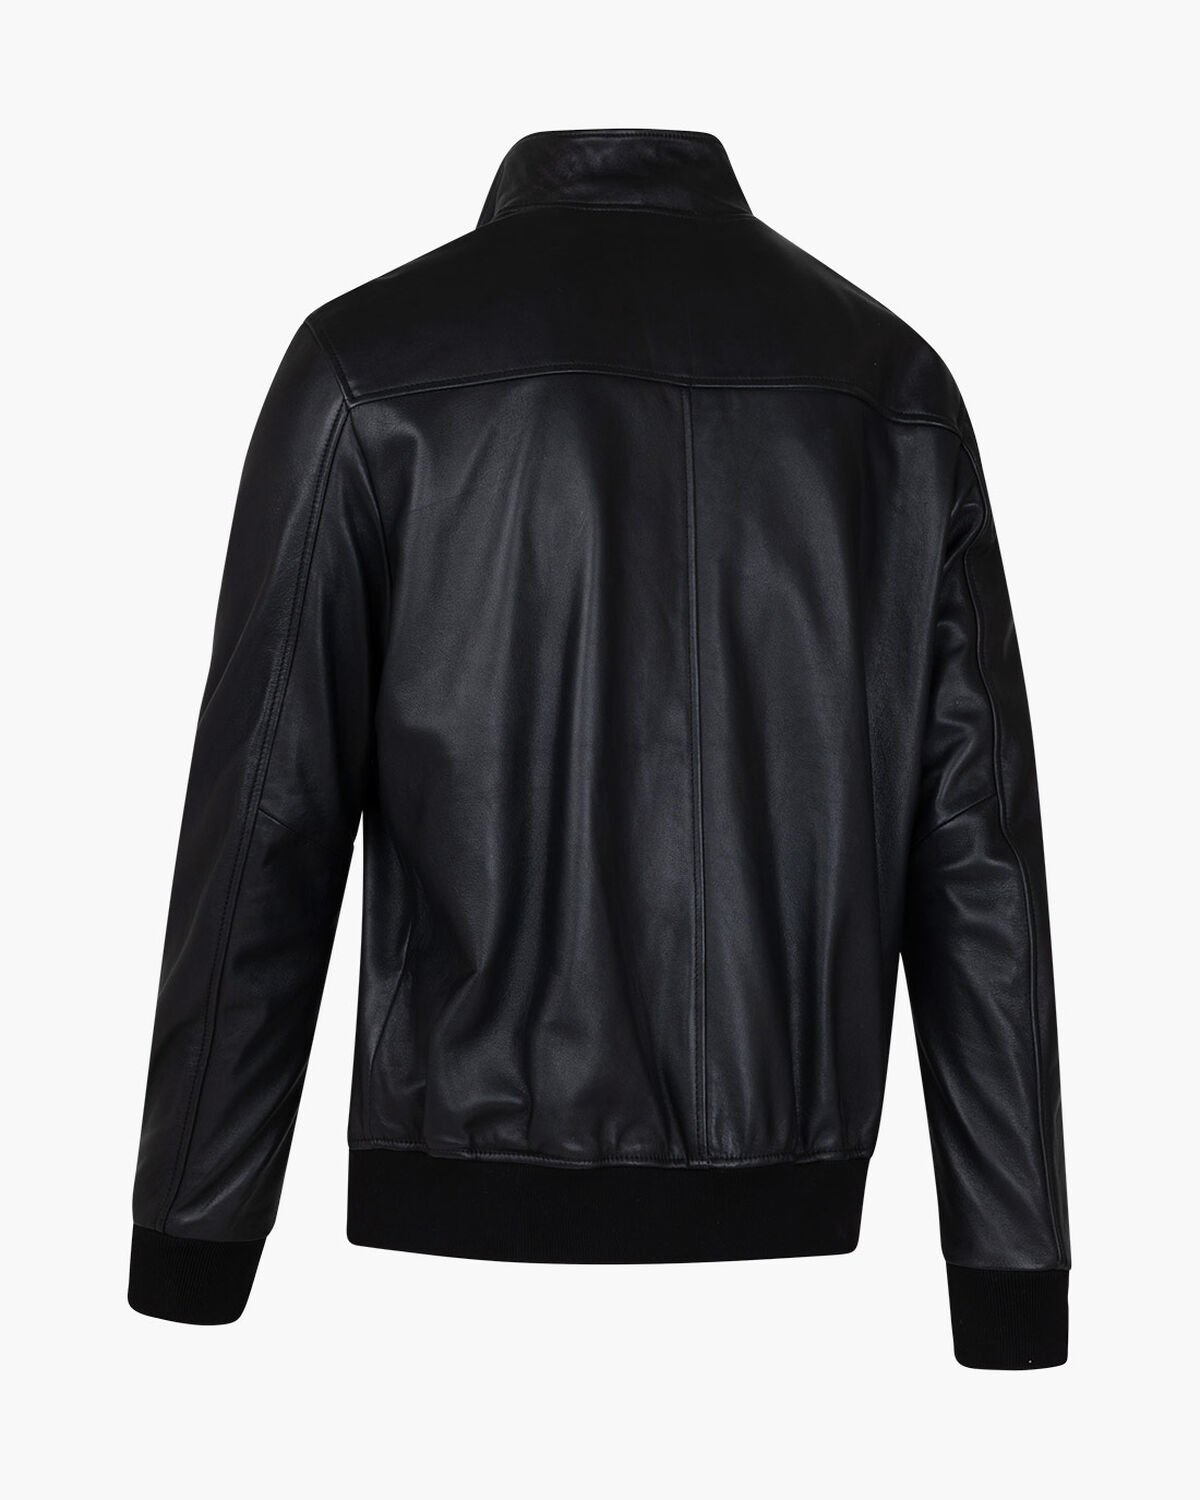 Dante Leather Harrington Jacket, Black, hi-res